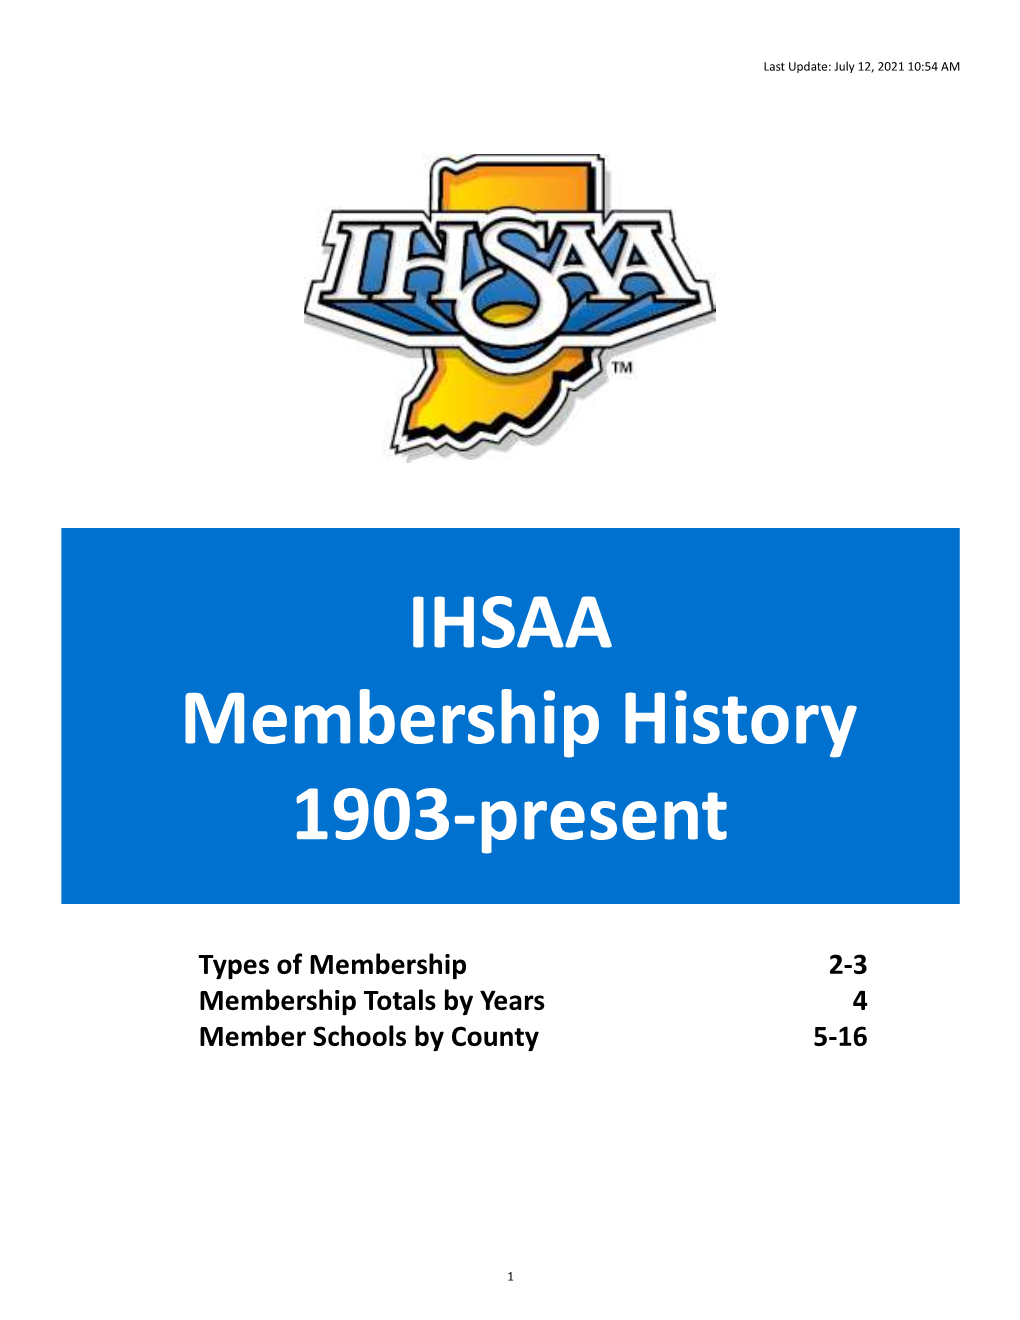 IHSAA Membership History 1903-Present